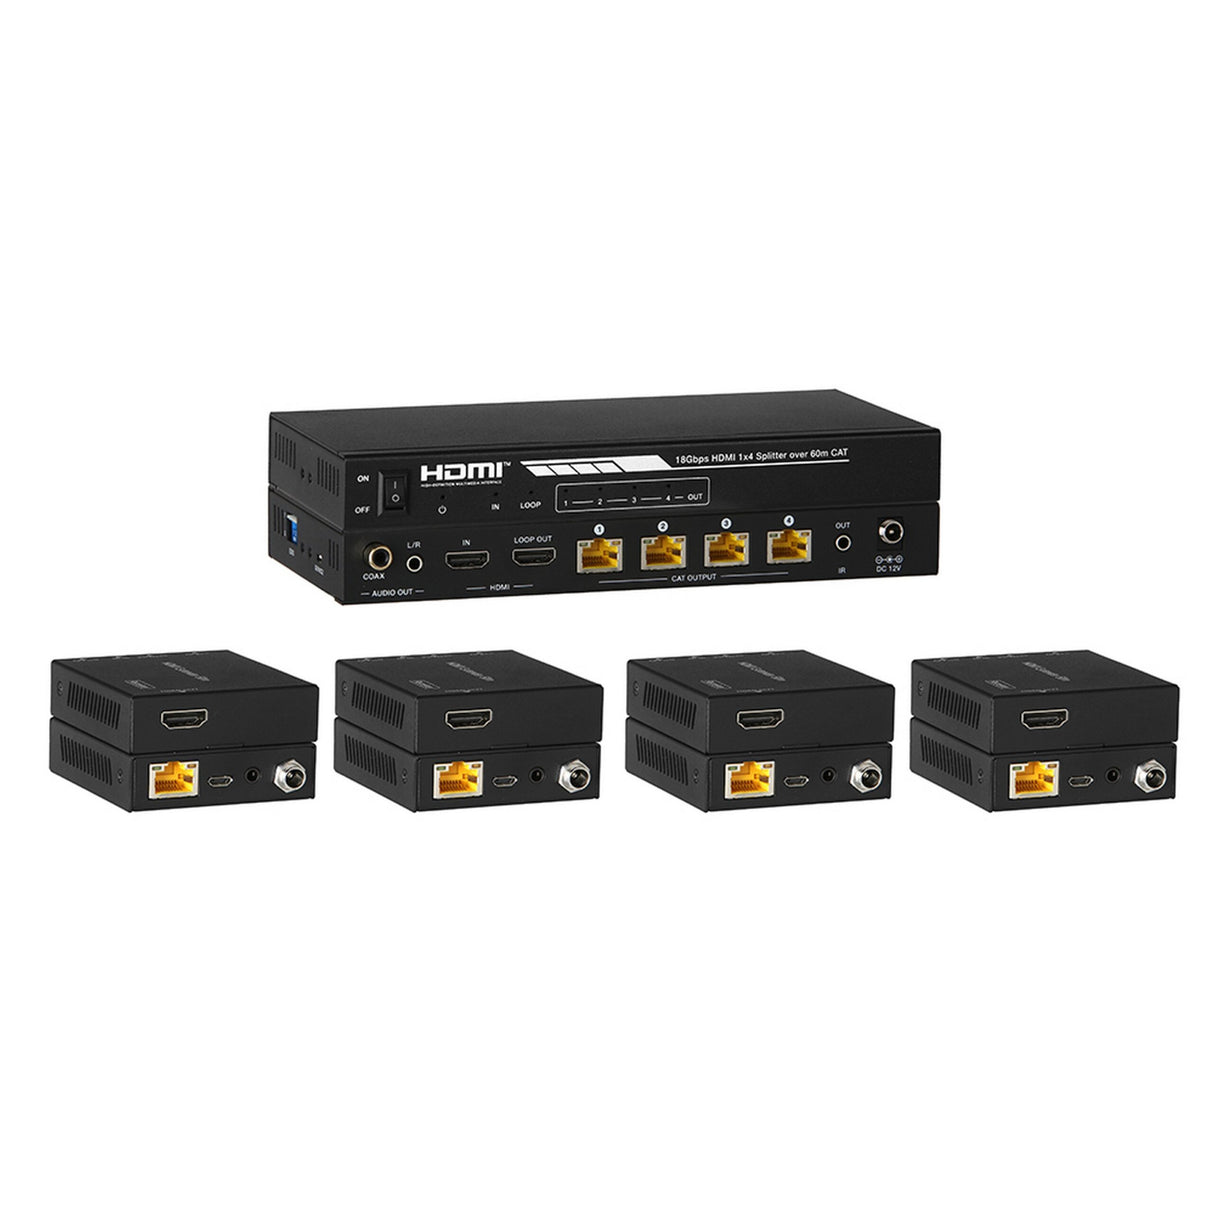 KanexPro SP-HDPOC1X4 HDMI 1 x 4 Distribution Amplifier over CAT5e/6